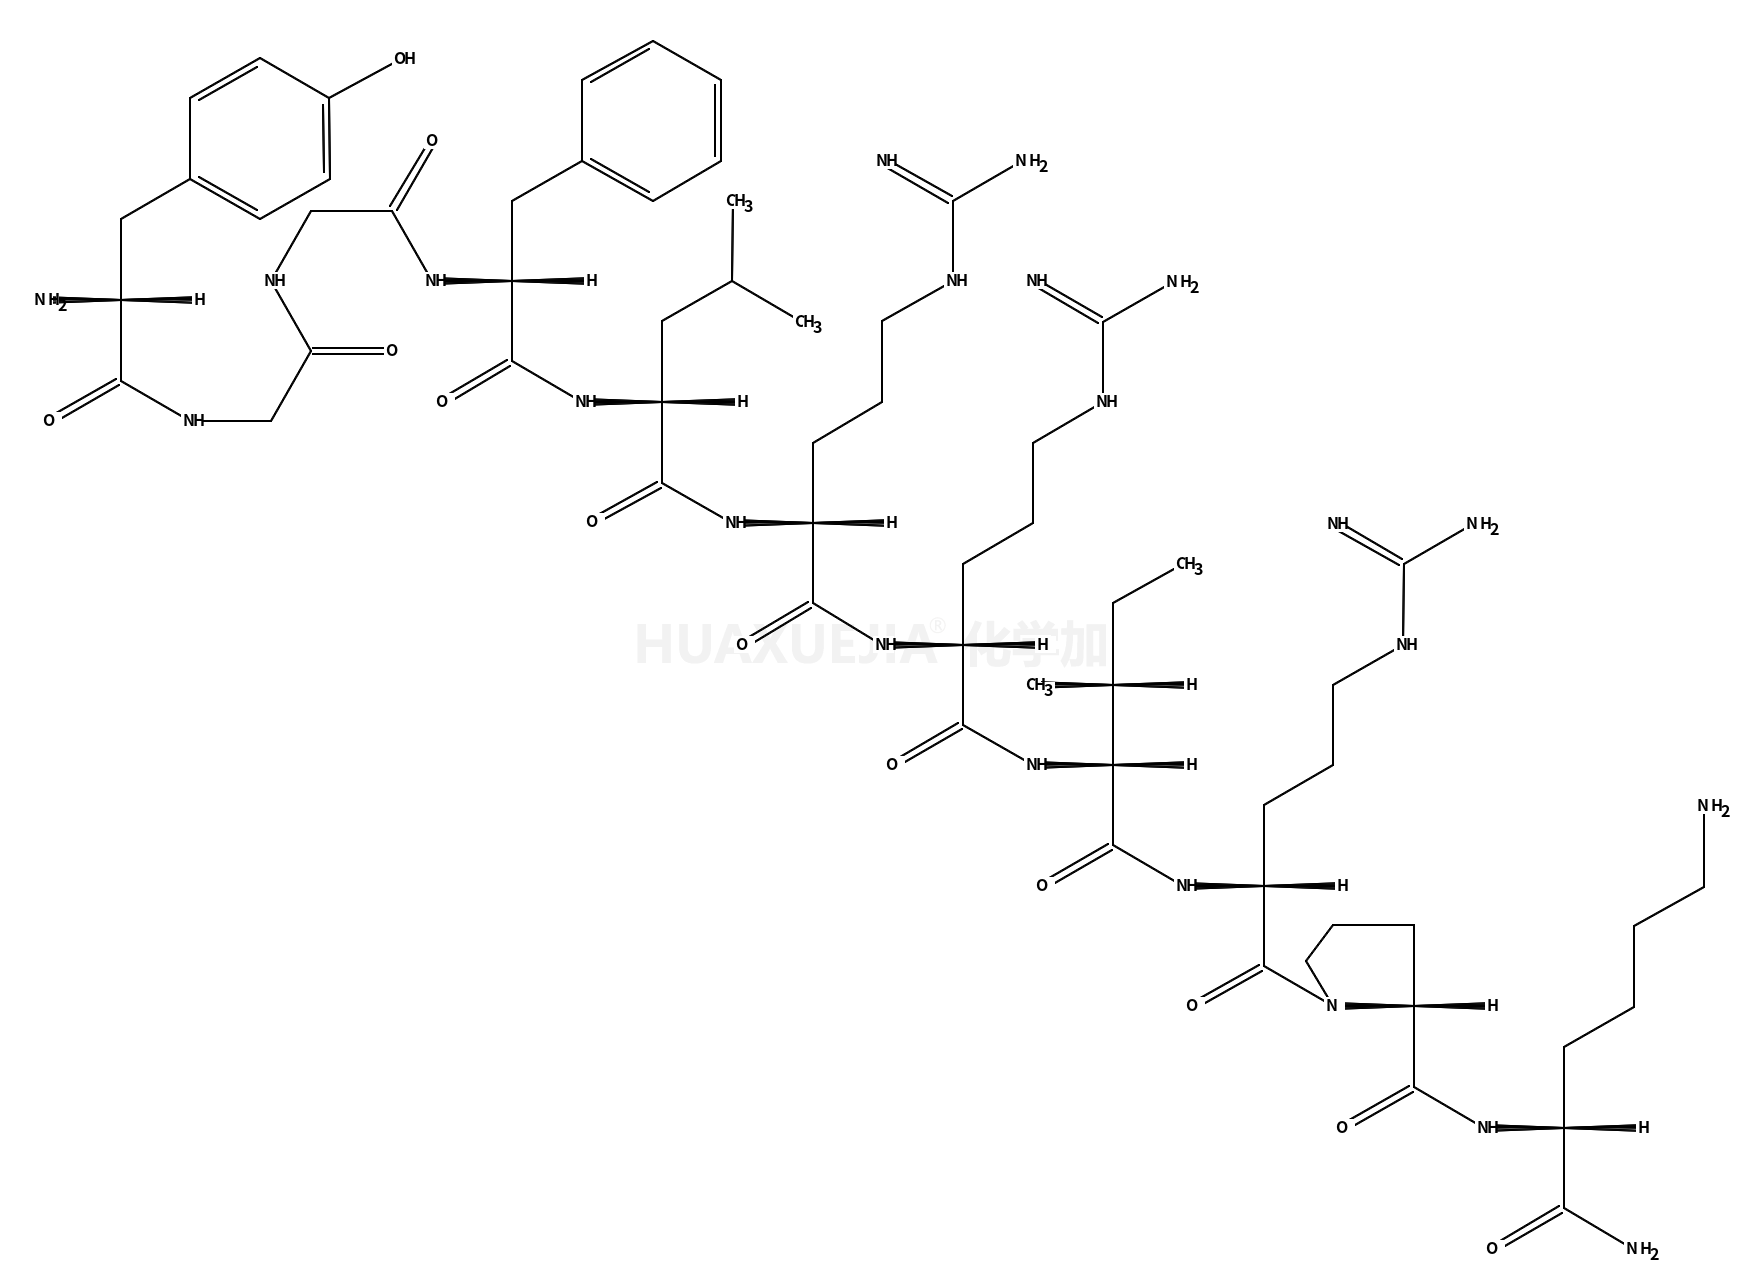 DYNORPHIN A (1-11) AMIDE